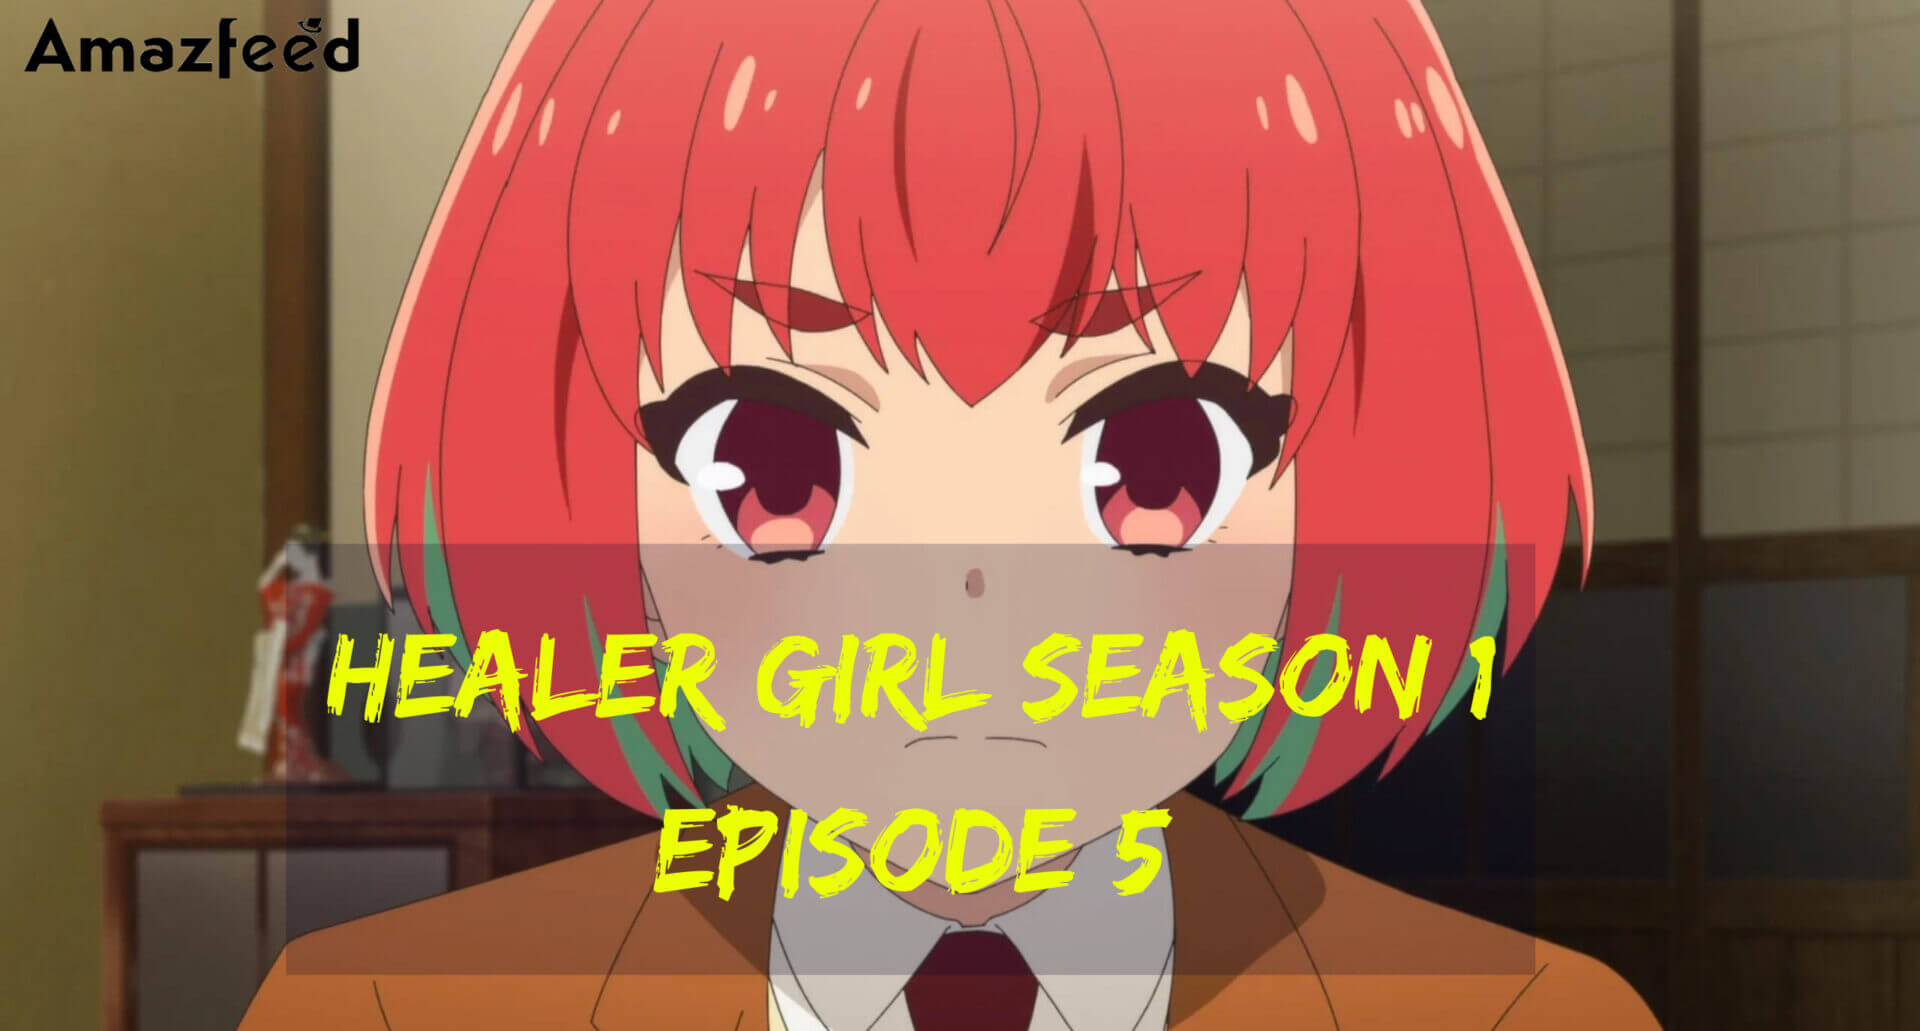 Healer Girl season 1 Episode 5 release date